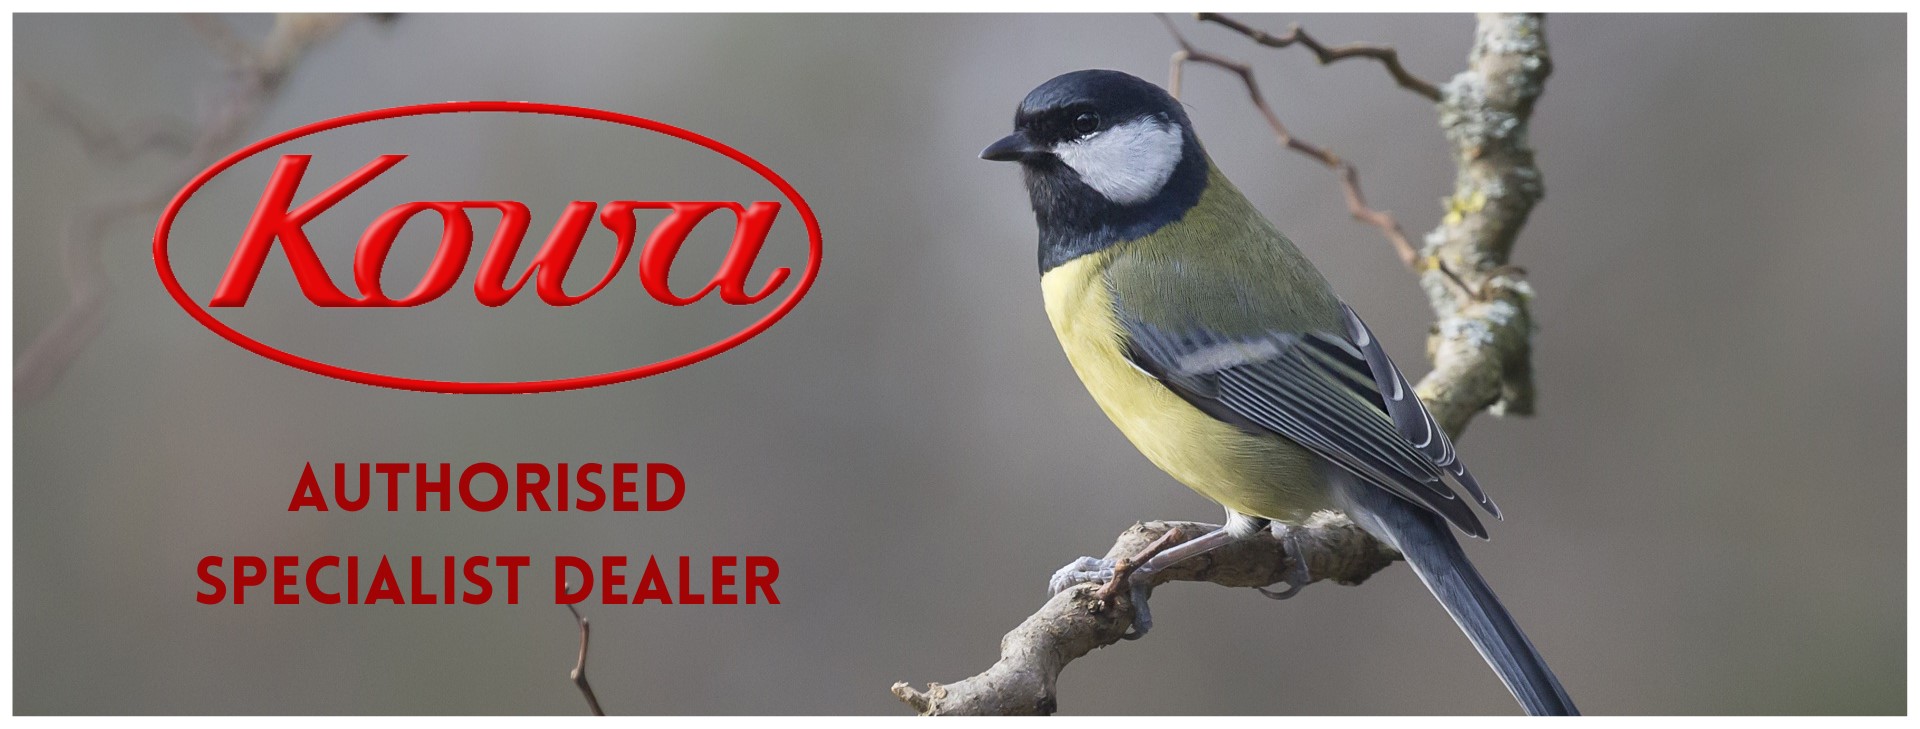 ace optics kowa authorised dealer bird picture